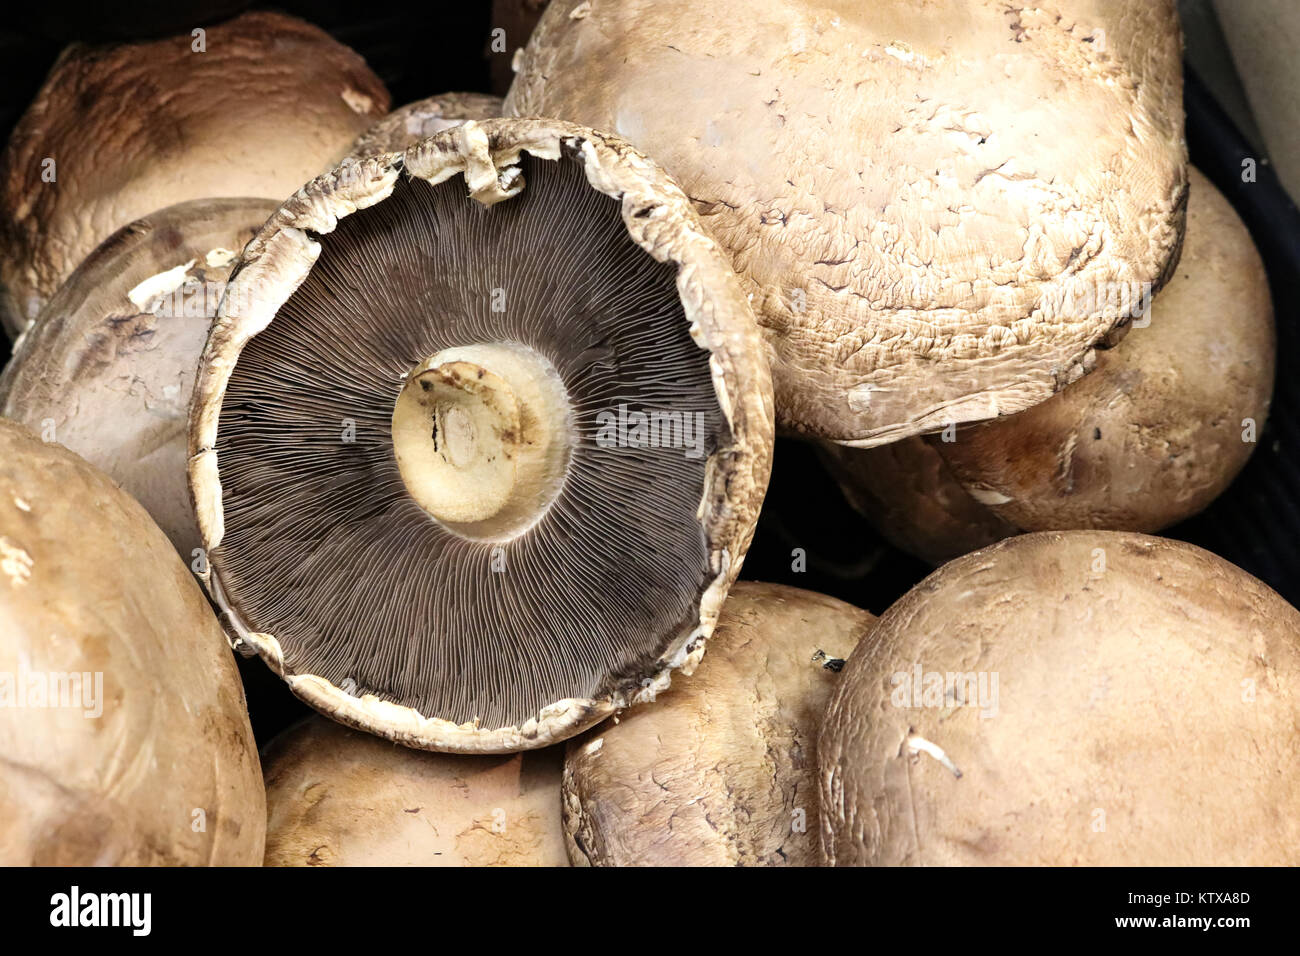 Closeup detail of small portobello mushroom caps against a black background.jpg Stock Photo